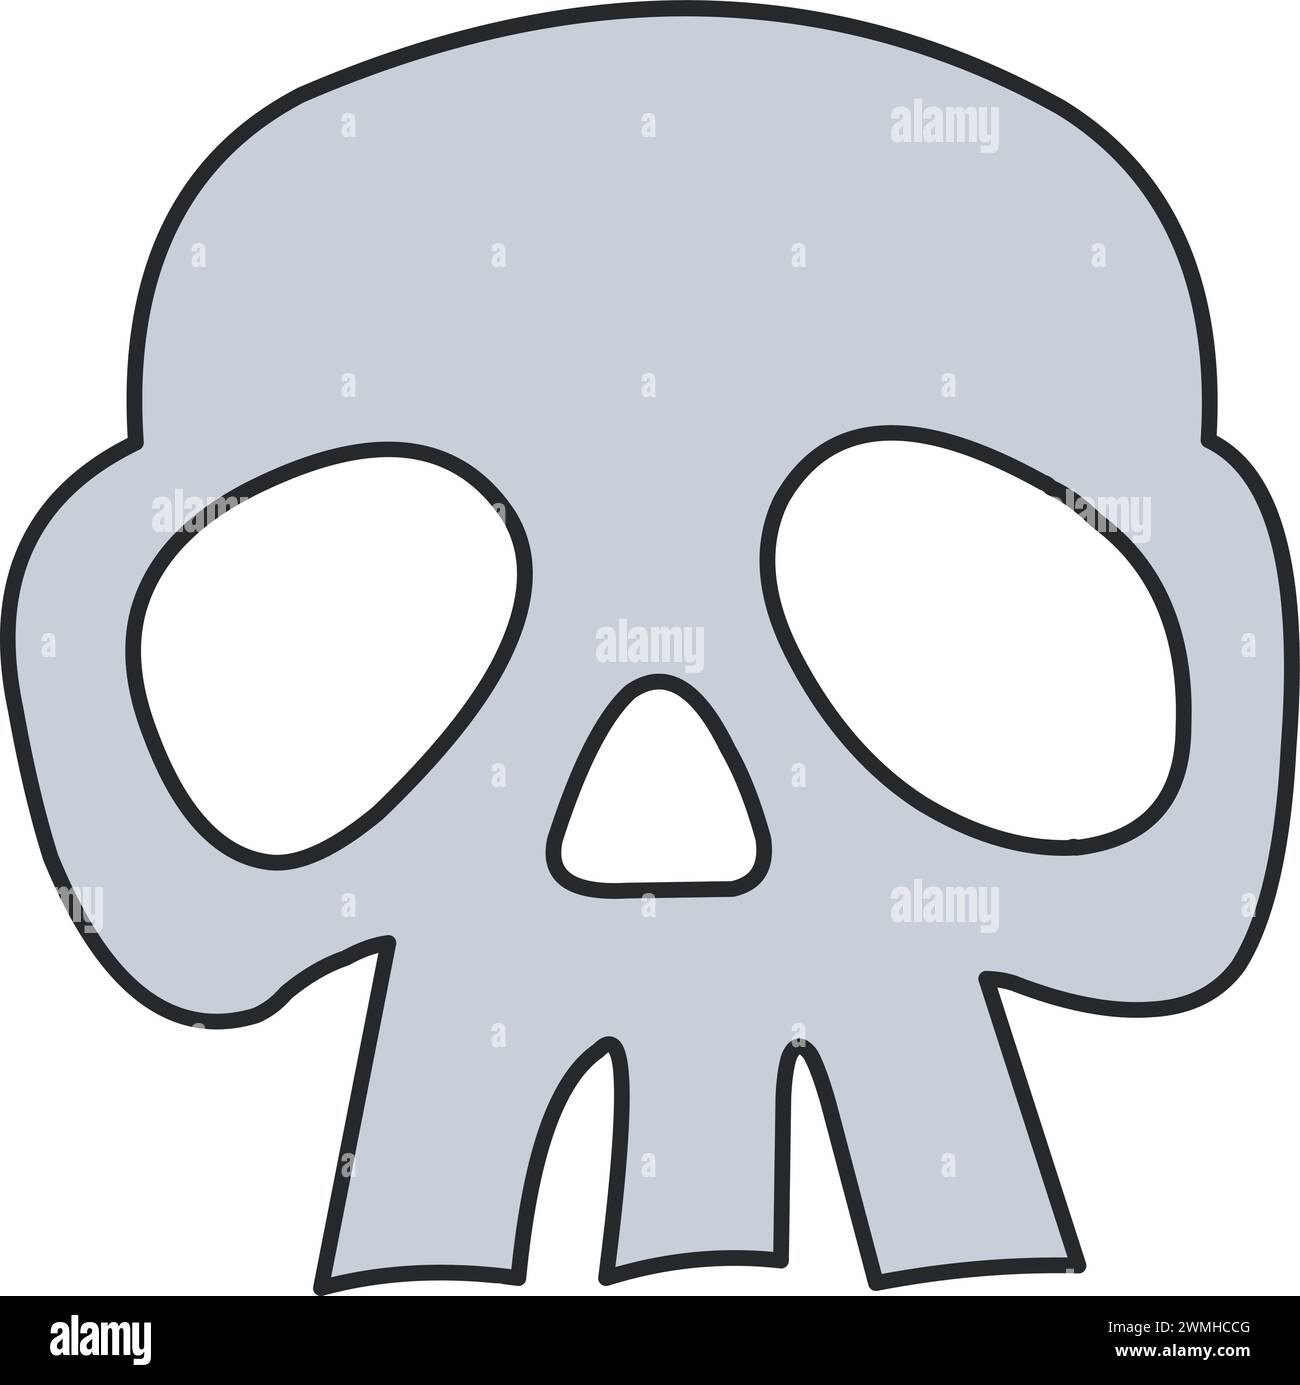 Human skull cartoon symbol or icon Stock Vector